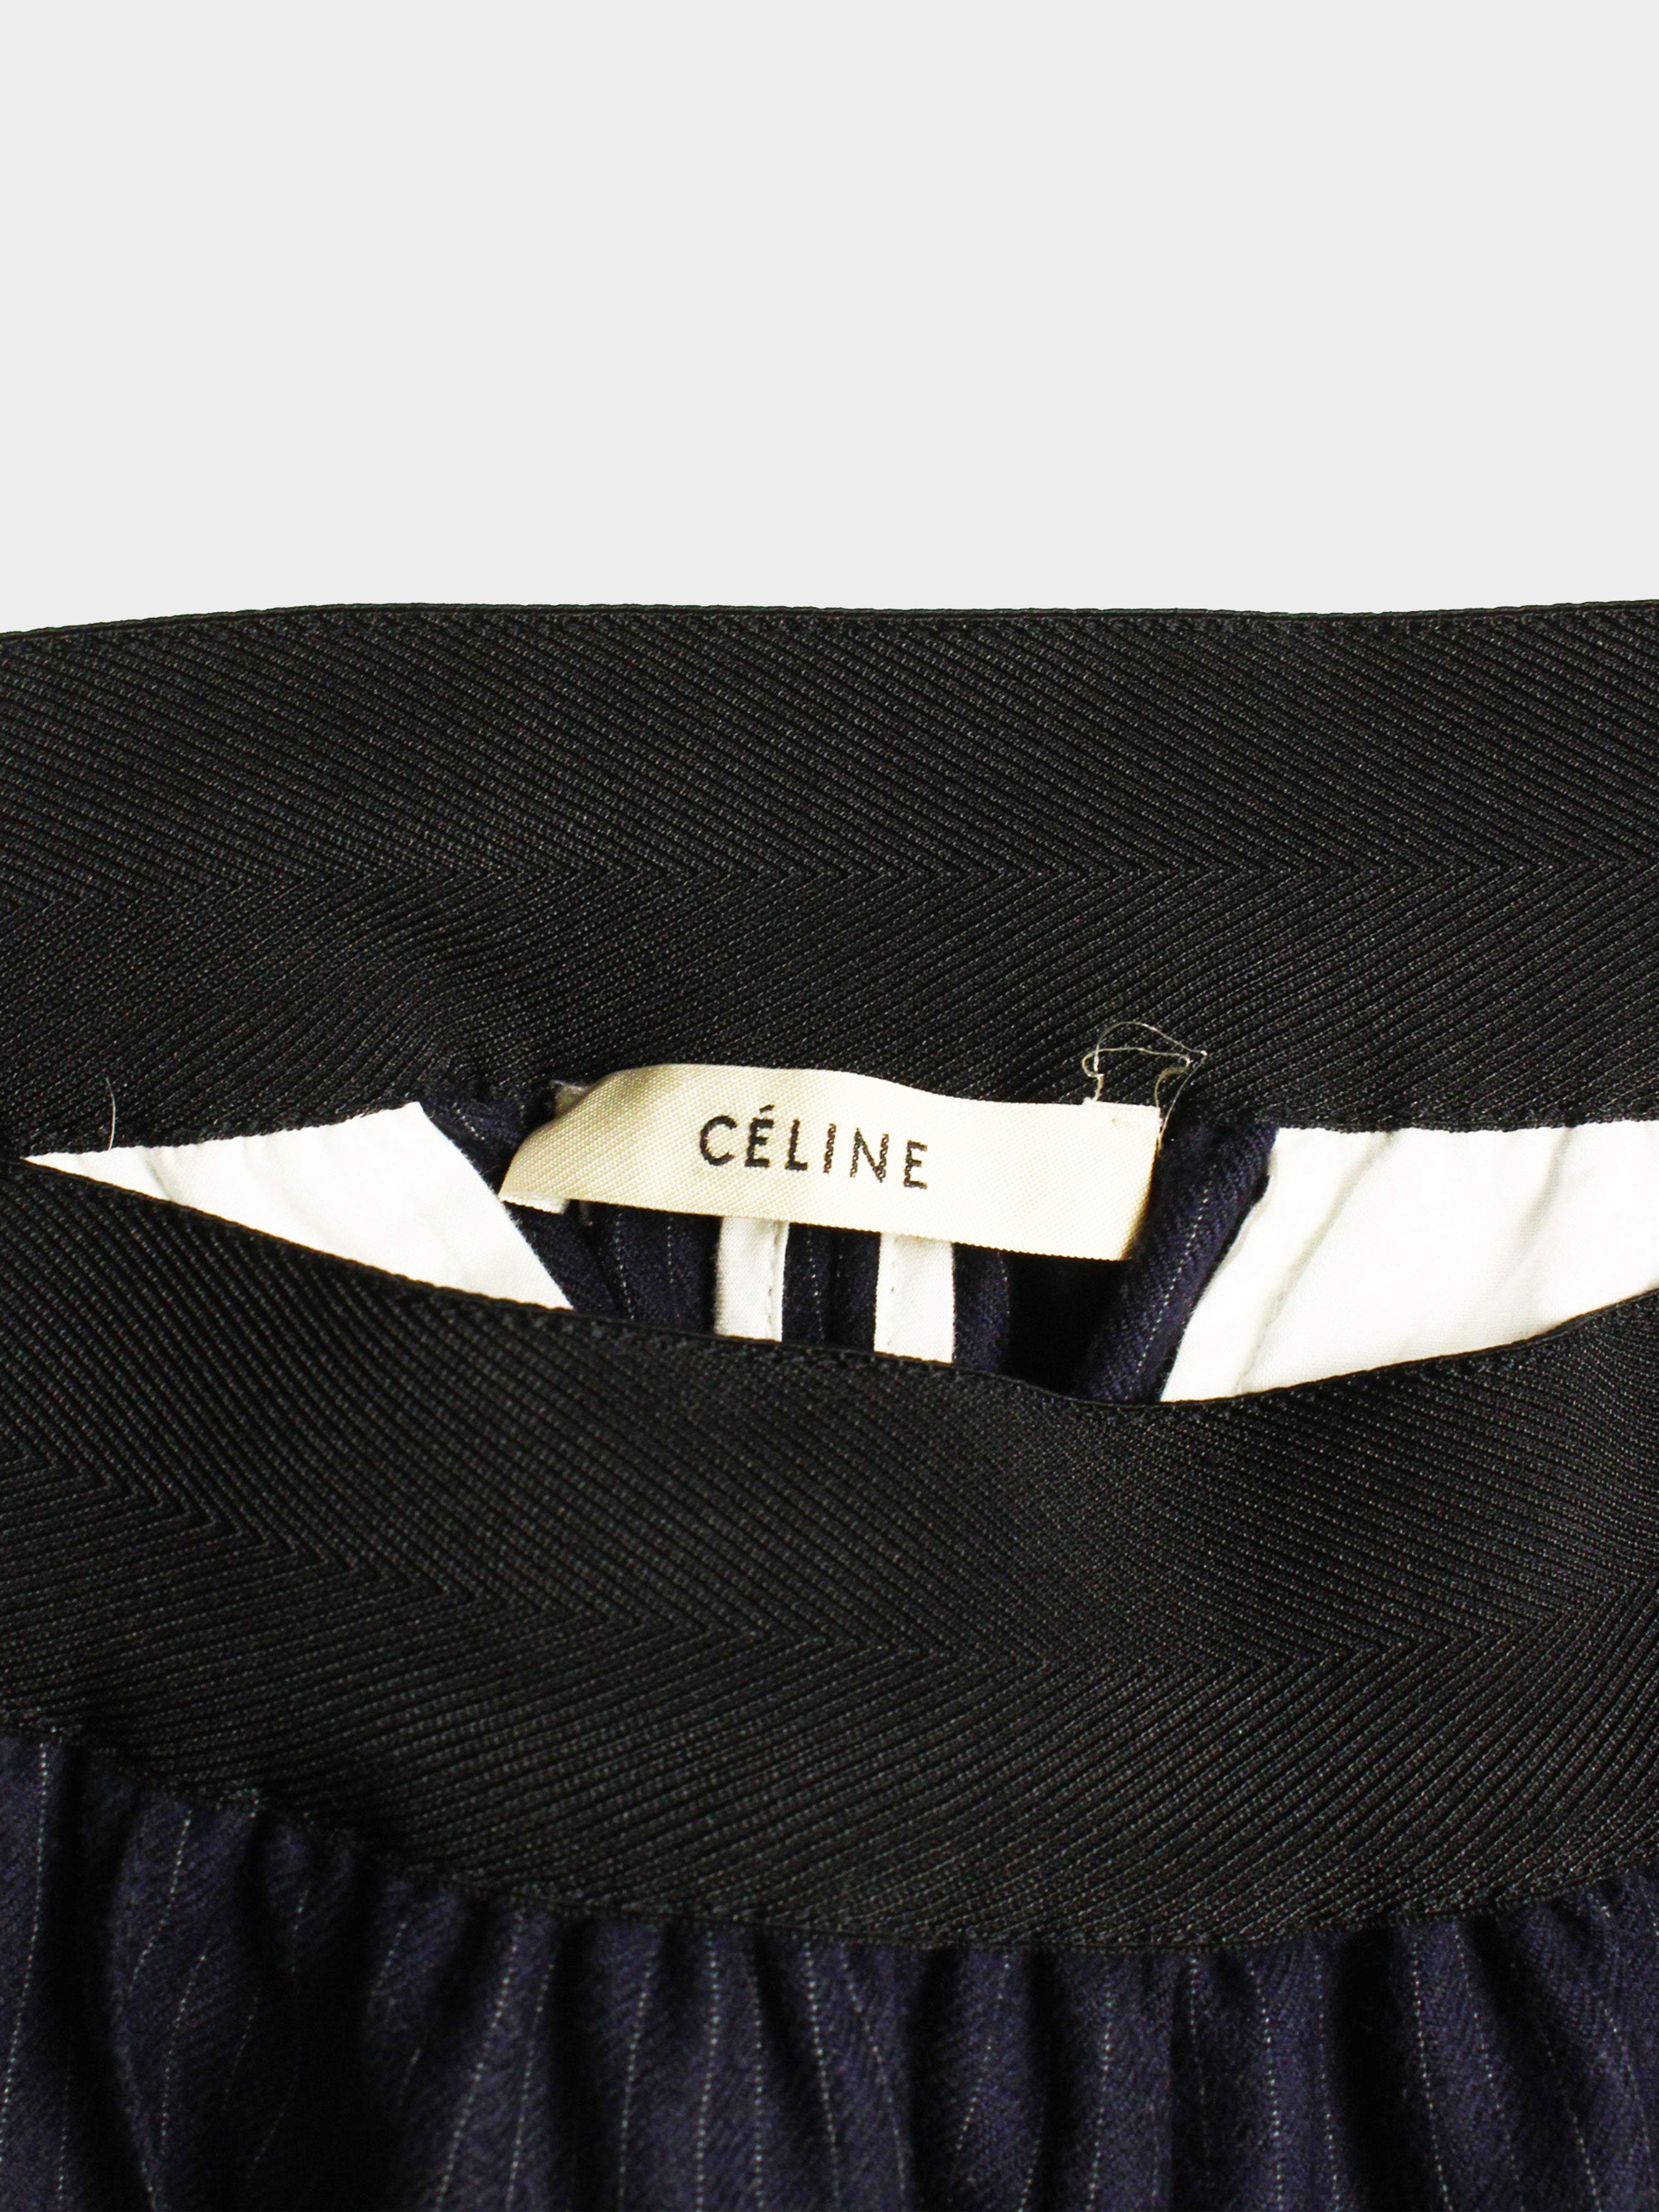 Céline by Phoebe Philo 2010s Navy Pants